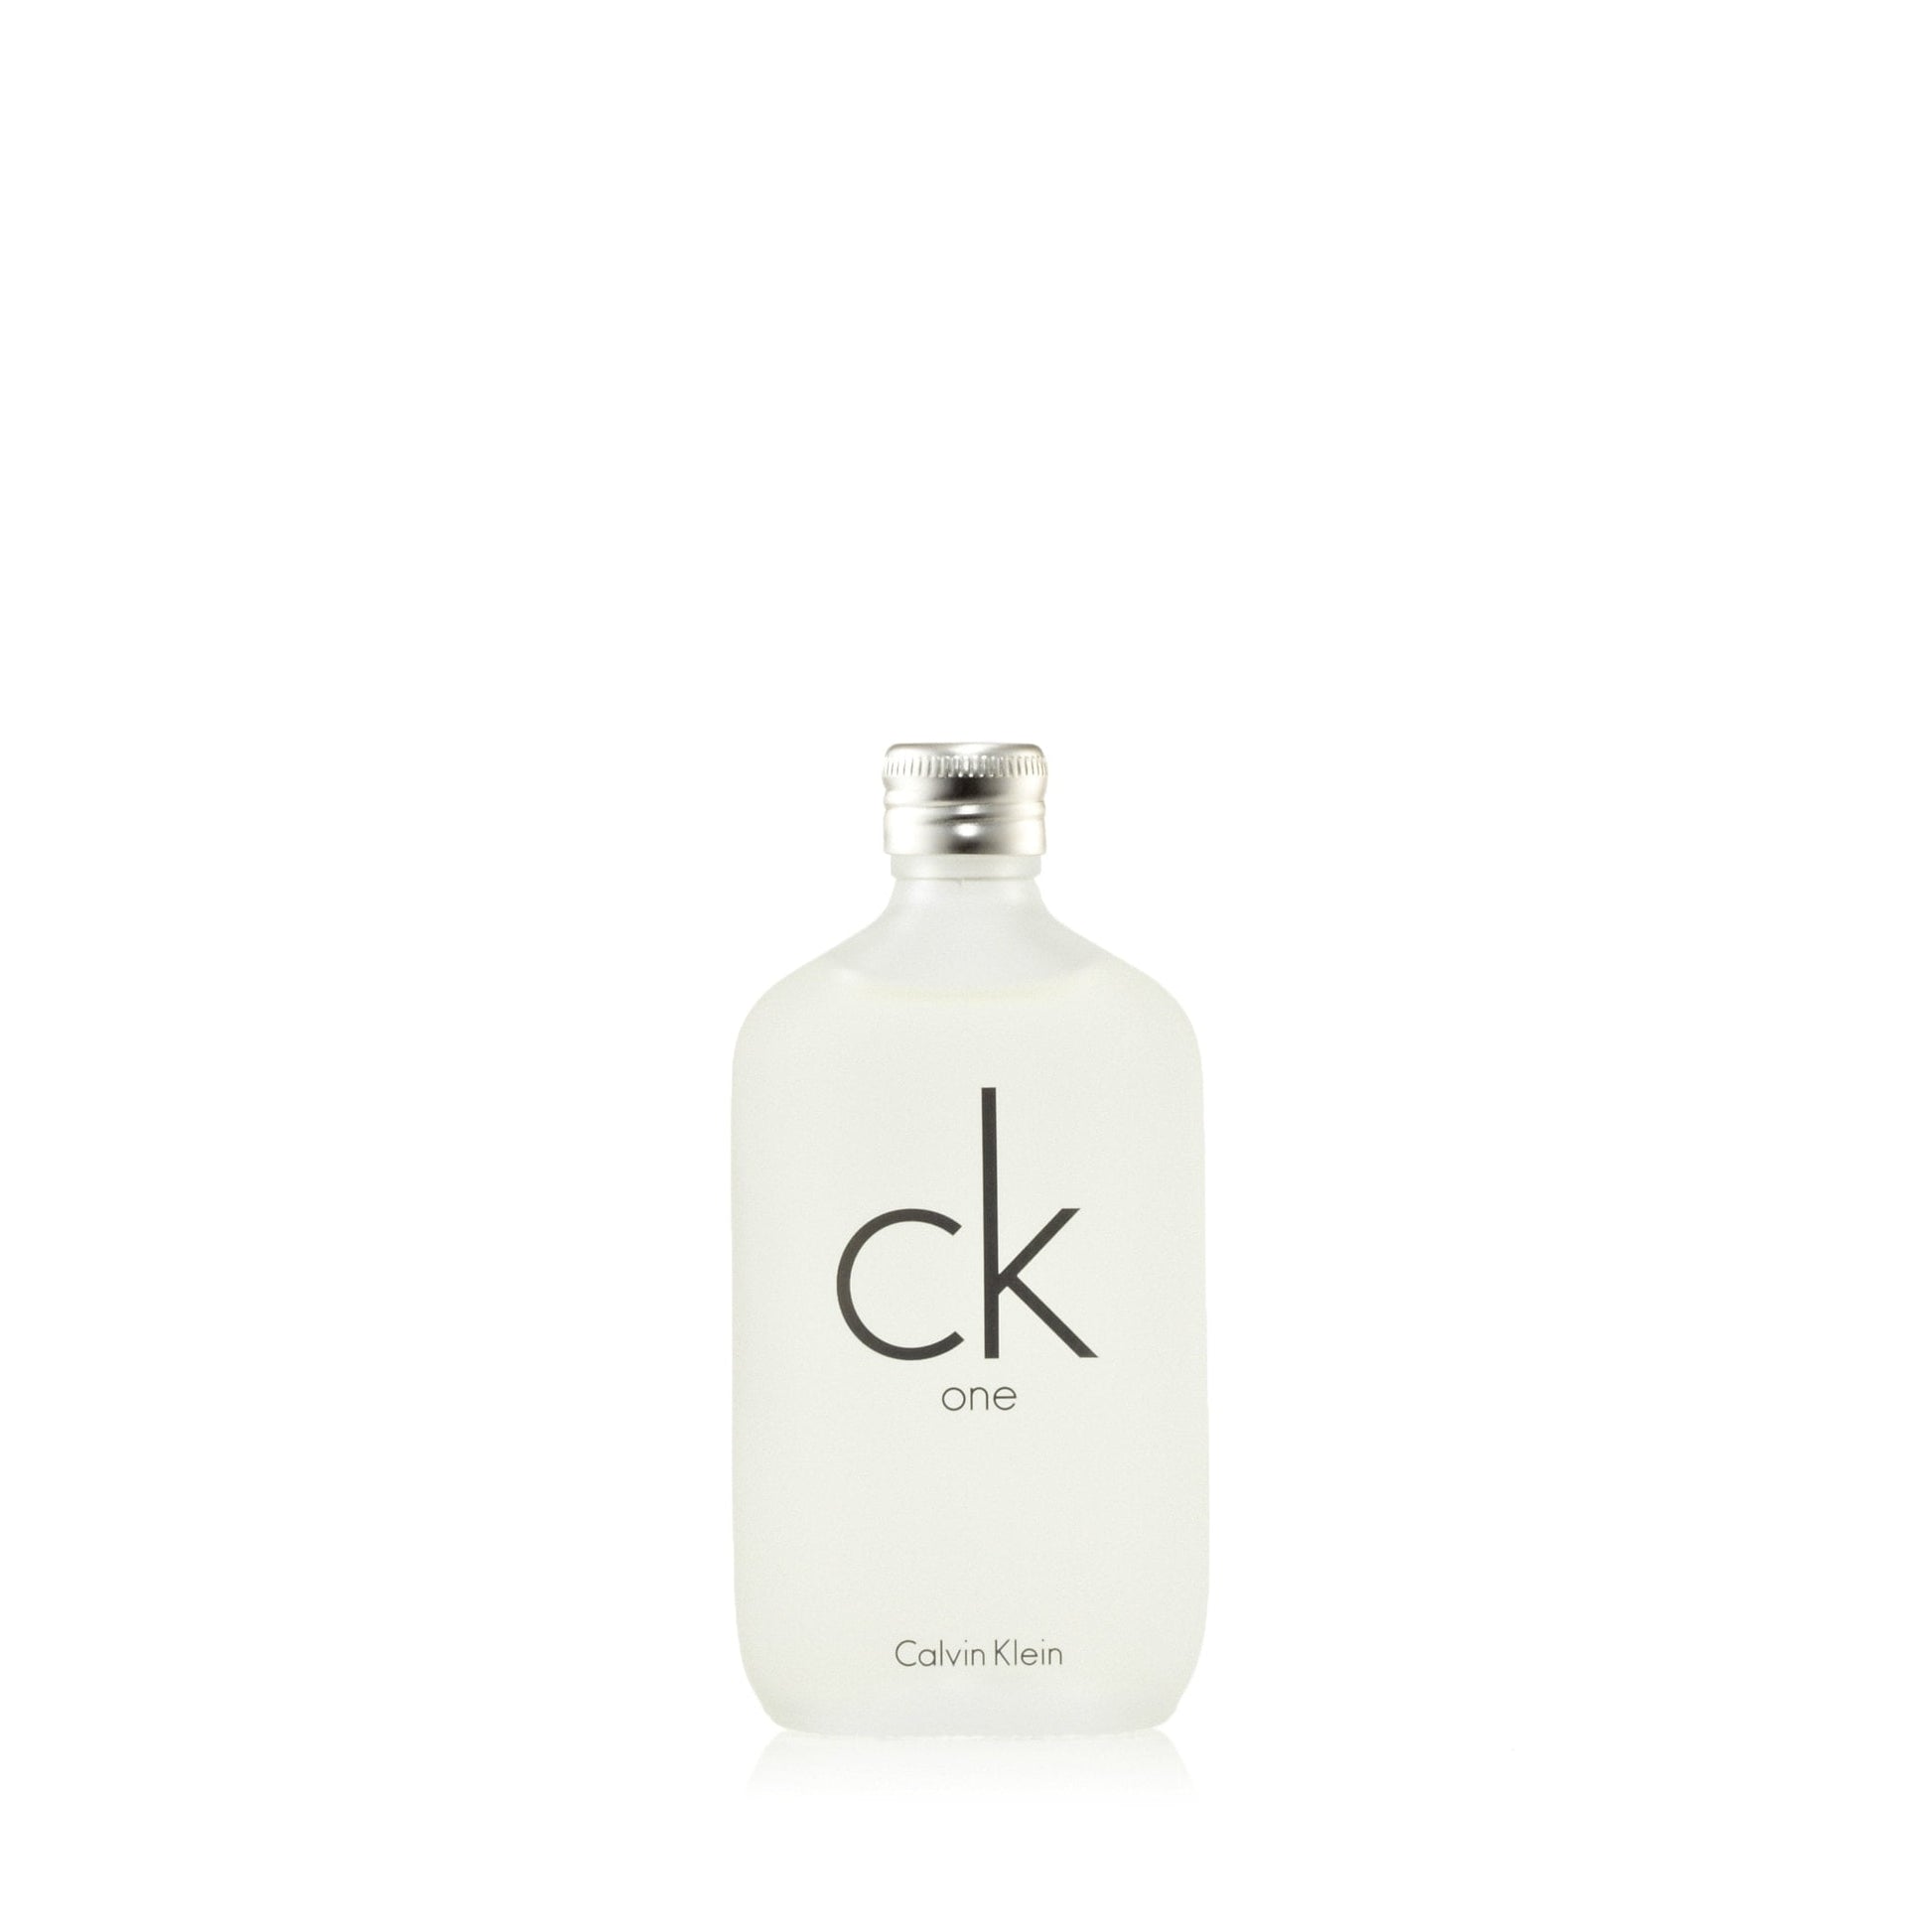 CK One Eau de Toilette Spray for Women and Men by Calvin Klein, Product image 3